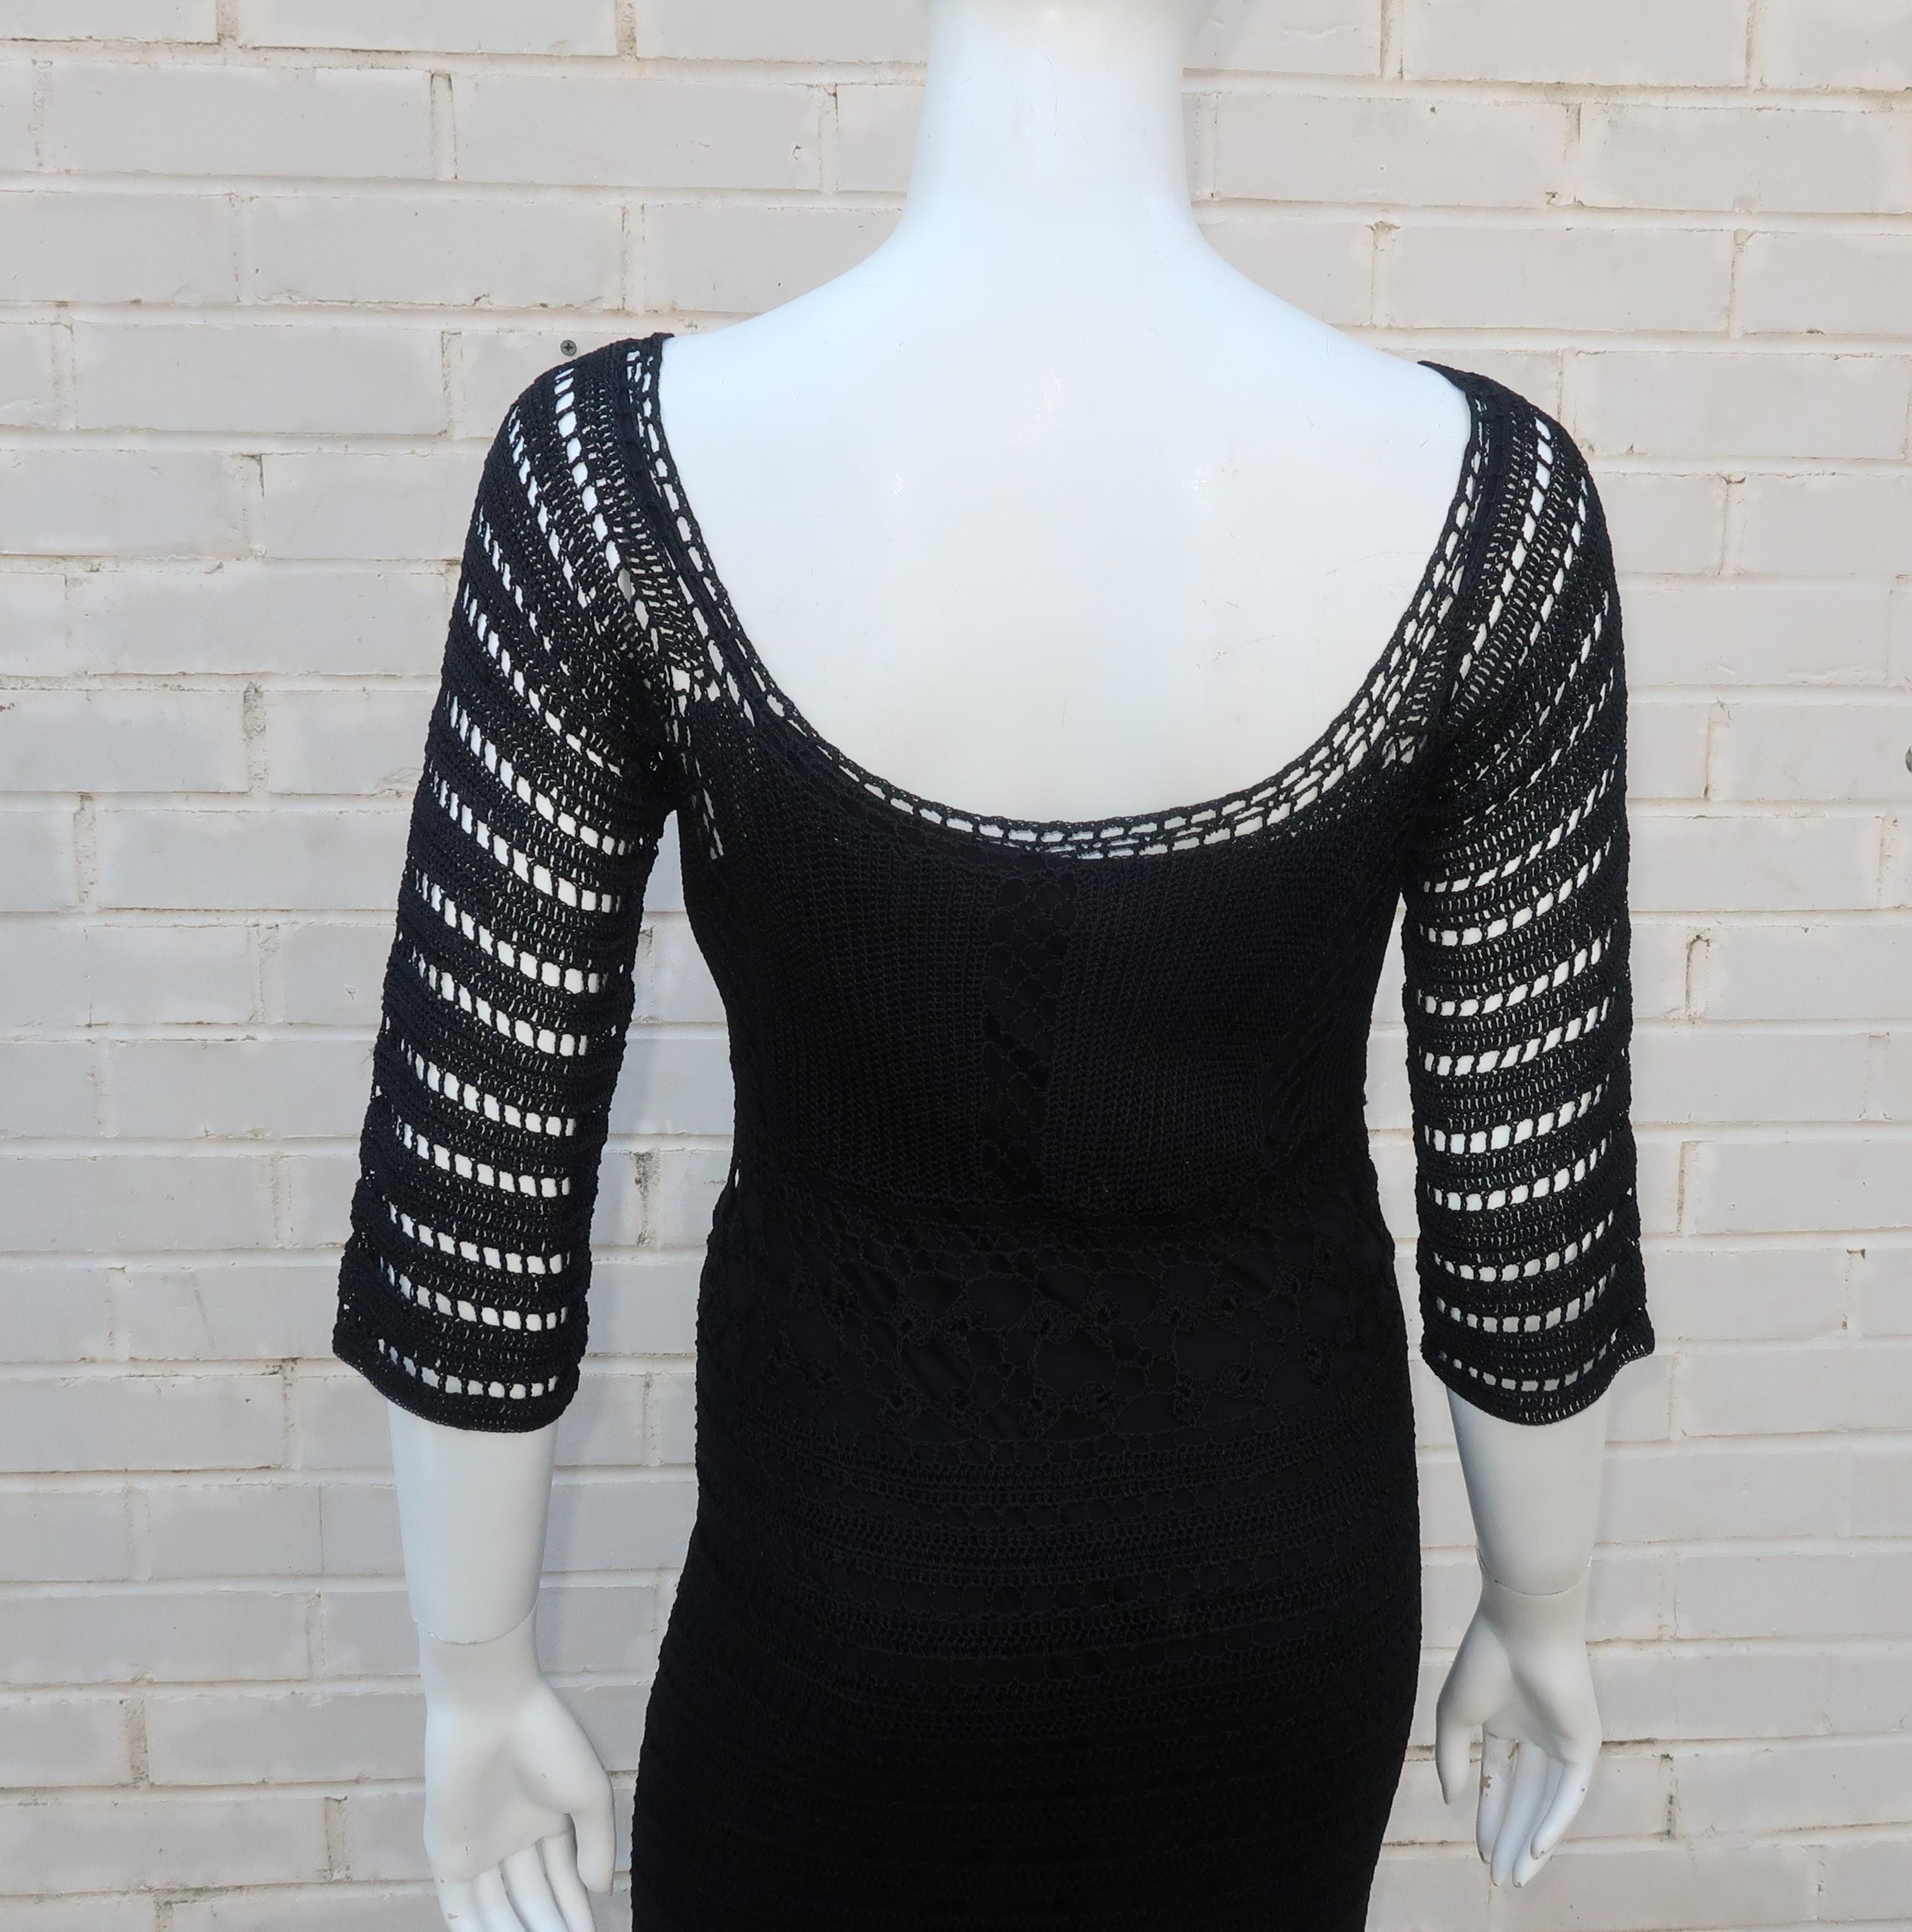 ABS Allen Schwartz Bohemian Black Crochet Dress 6